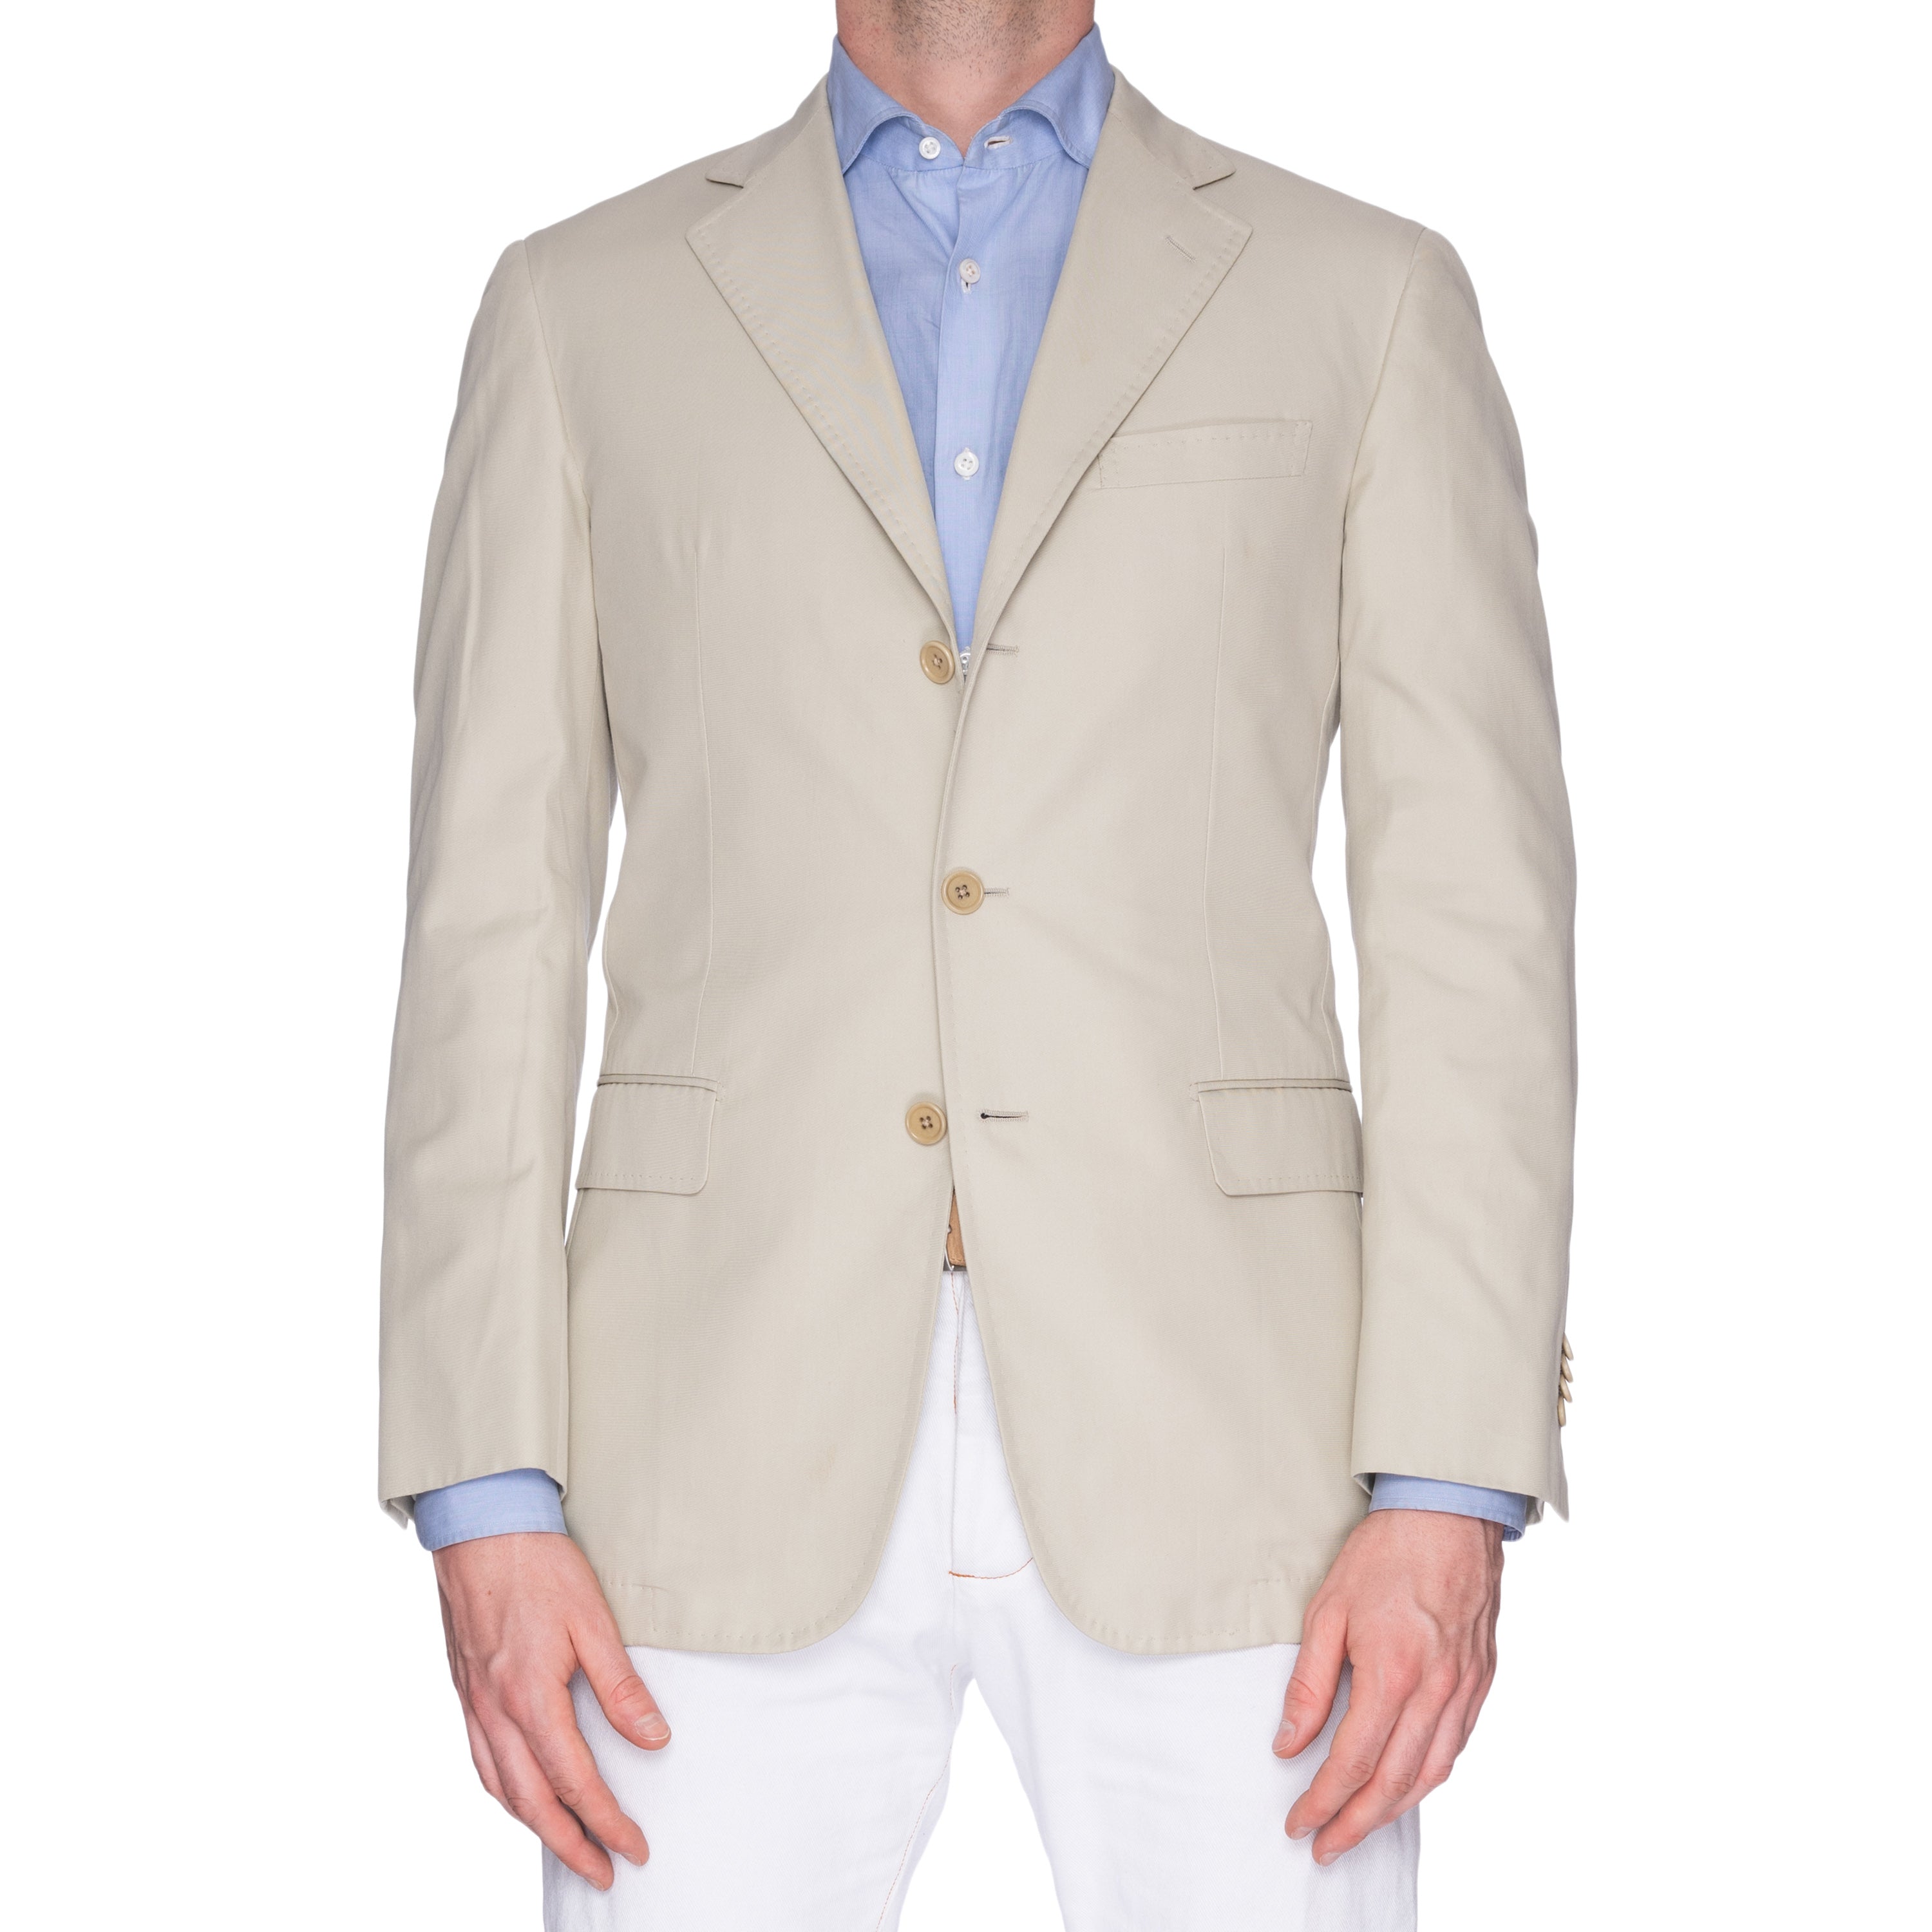 CASTANGIA LEISURE Beige Cotton Twill Unlined Jacket EU 50 NEW US 40 CASTANGIA